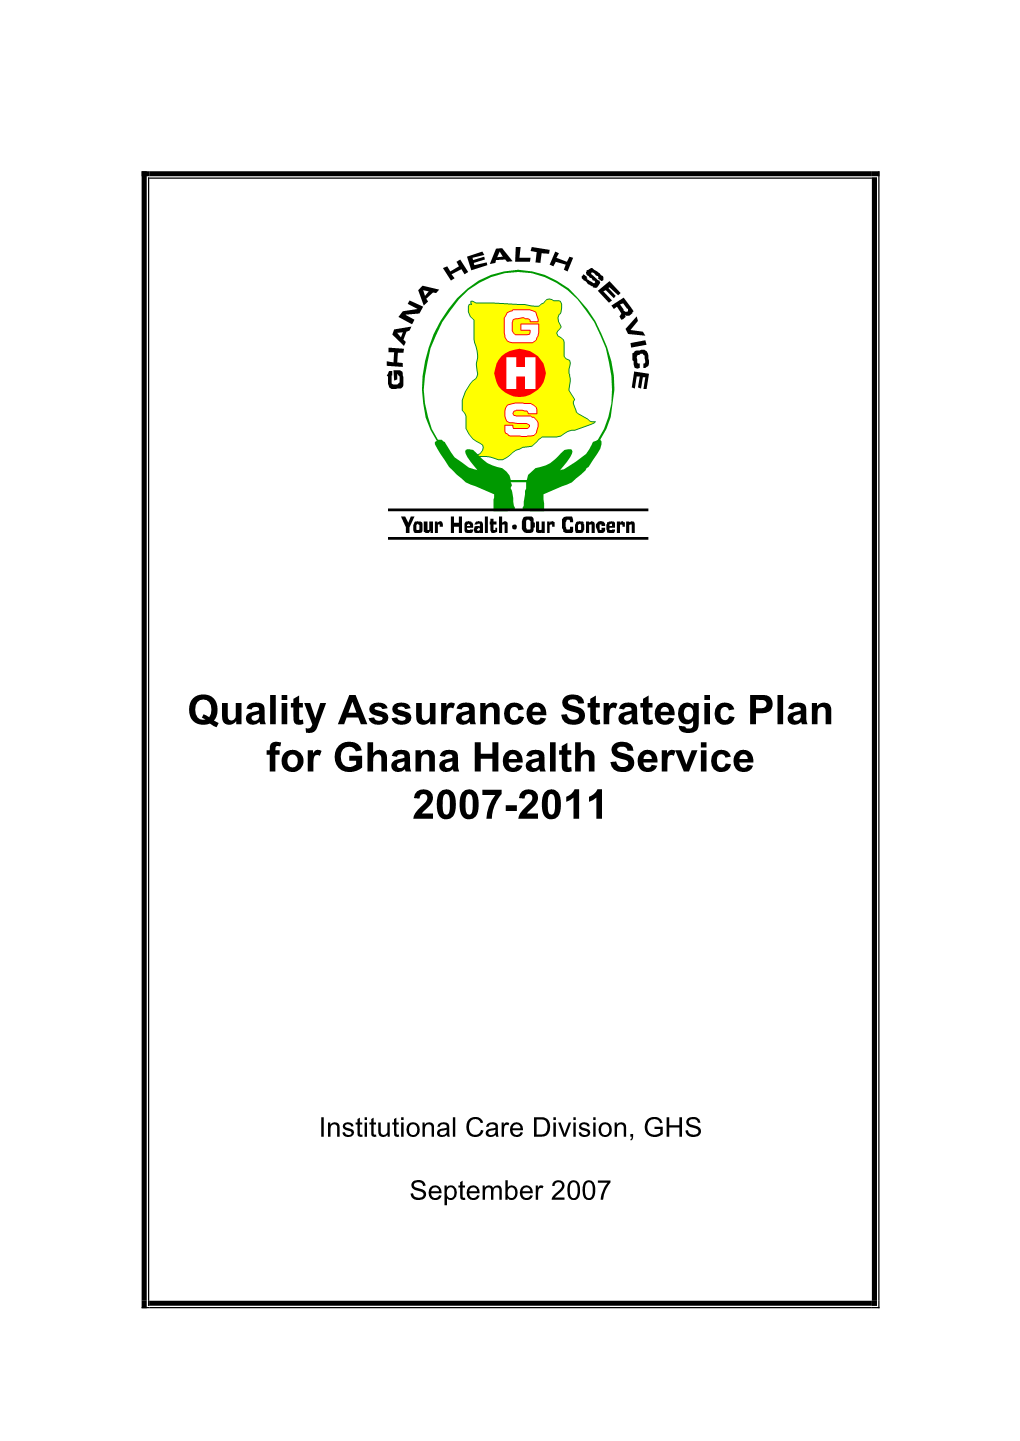 Quality Assurance Strategic Plan for Ghana Health Service 2007-2011